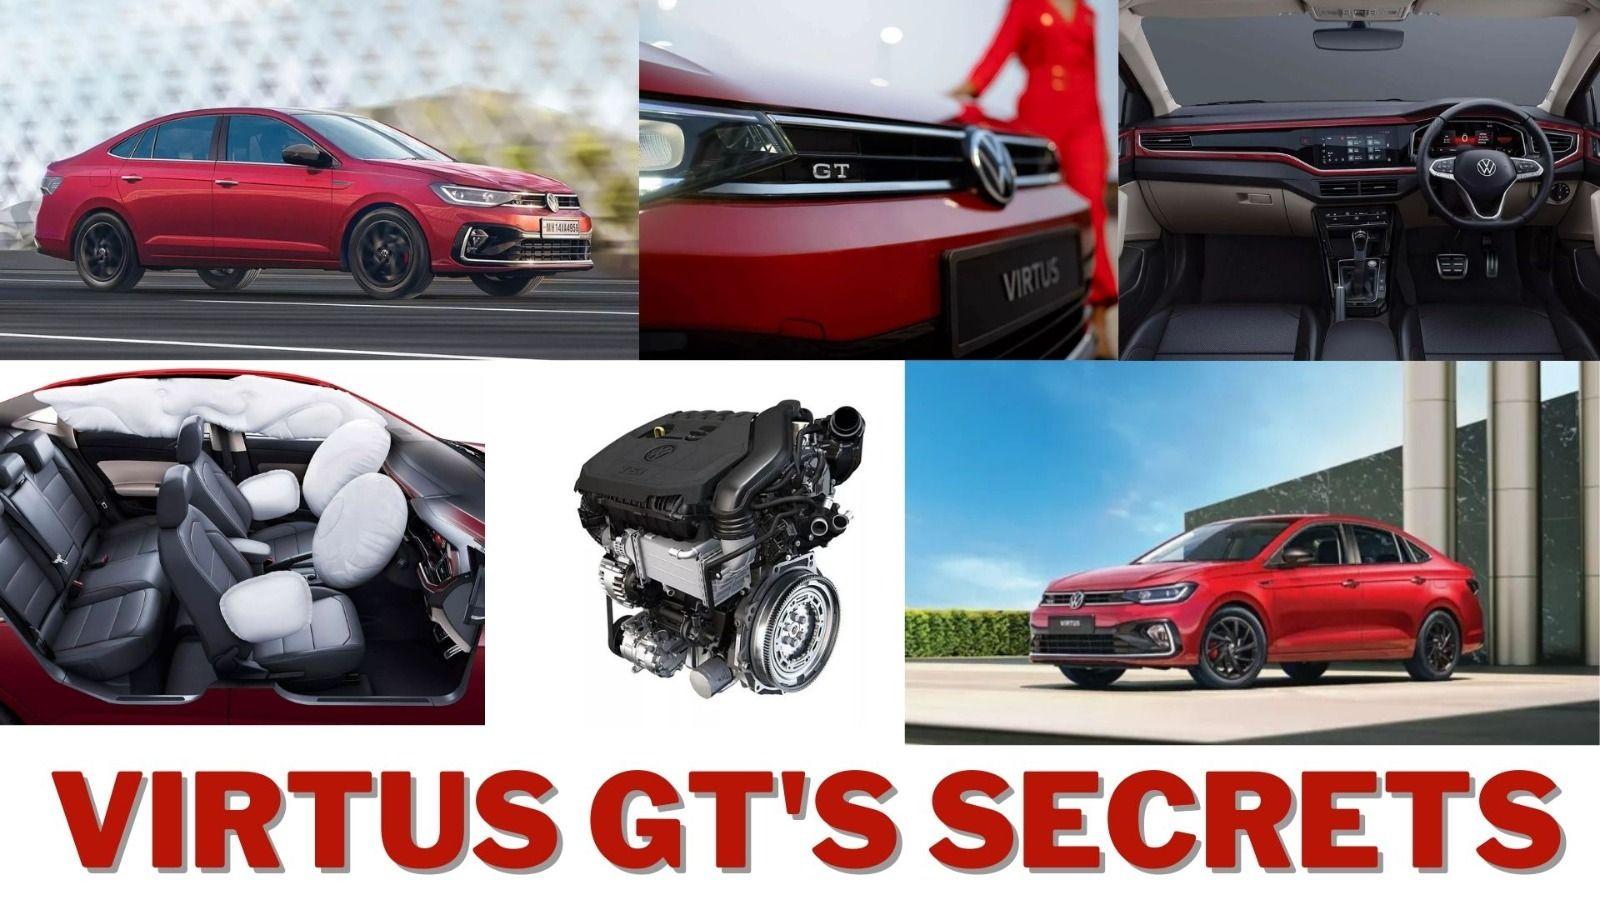  Volkswagen Virtus GT: Buckle up and discover Virtus GT's Secrets 